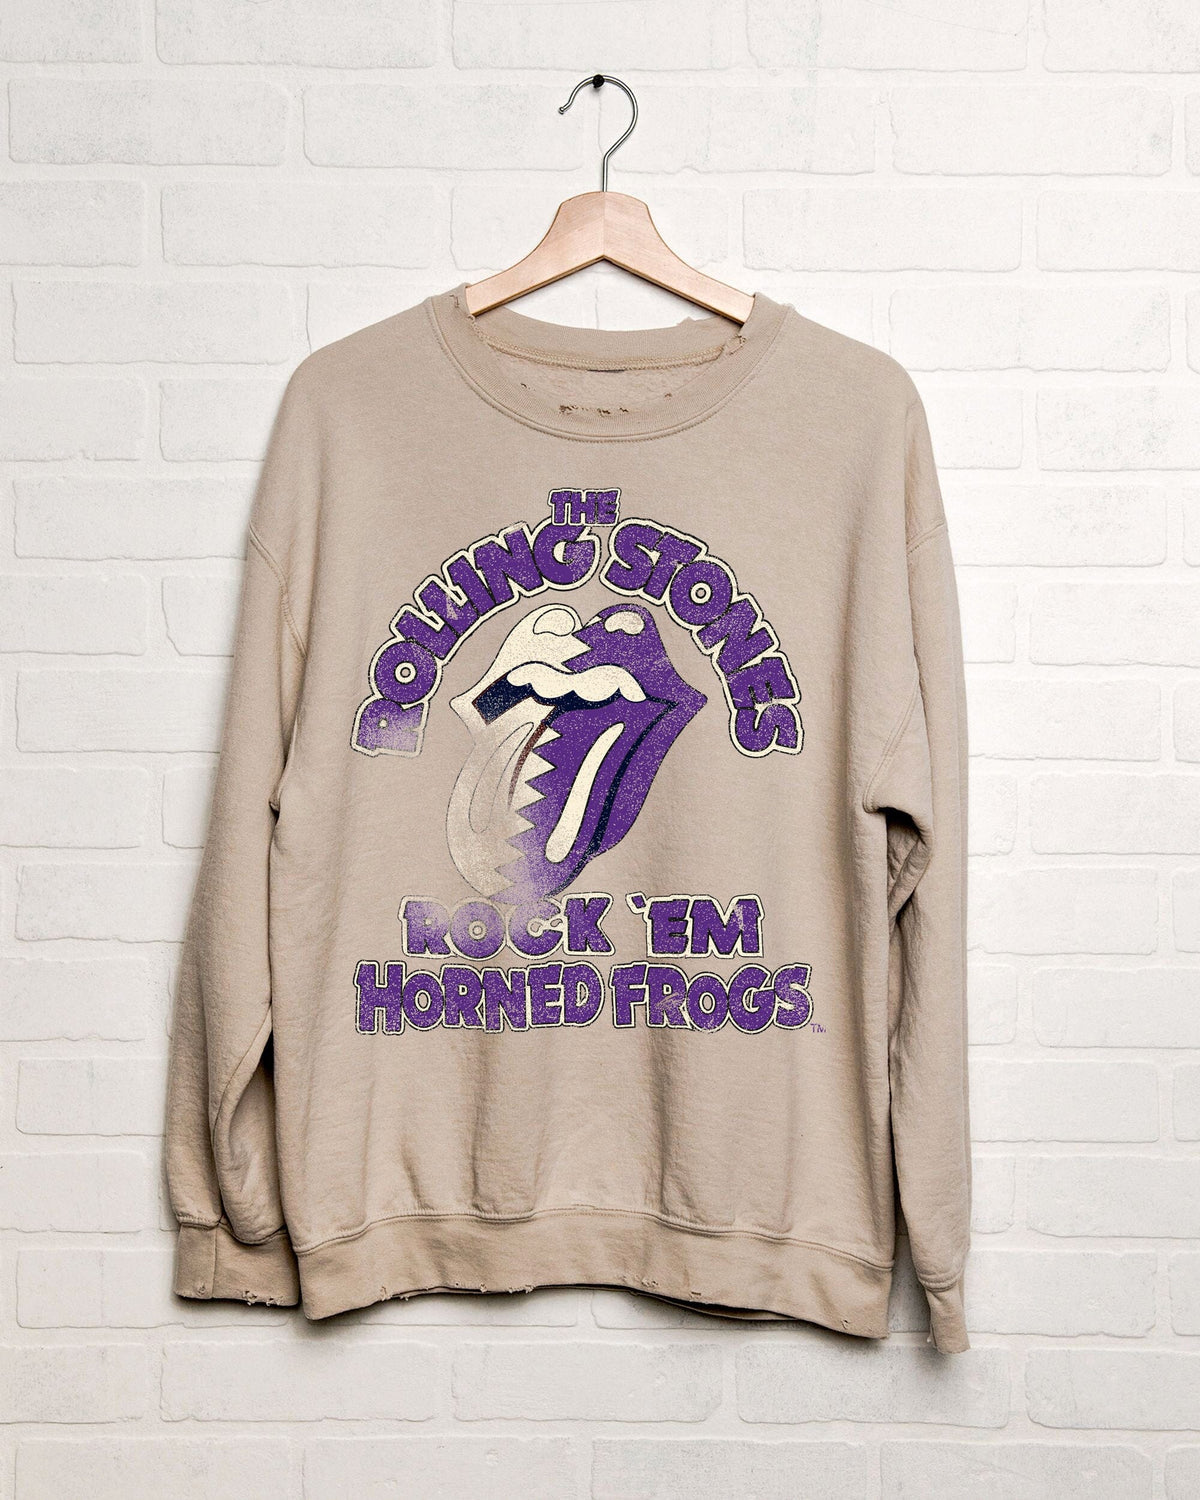 Rolling Stones Rock 'Em TCU Horned Frogs Sand Thrifted Sweatshirt